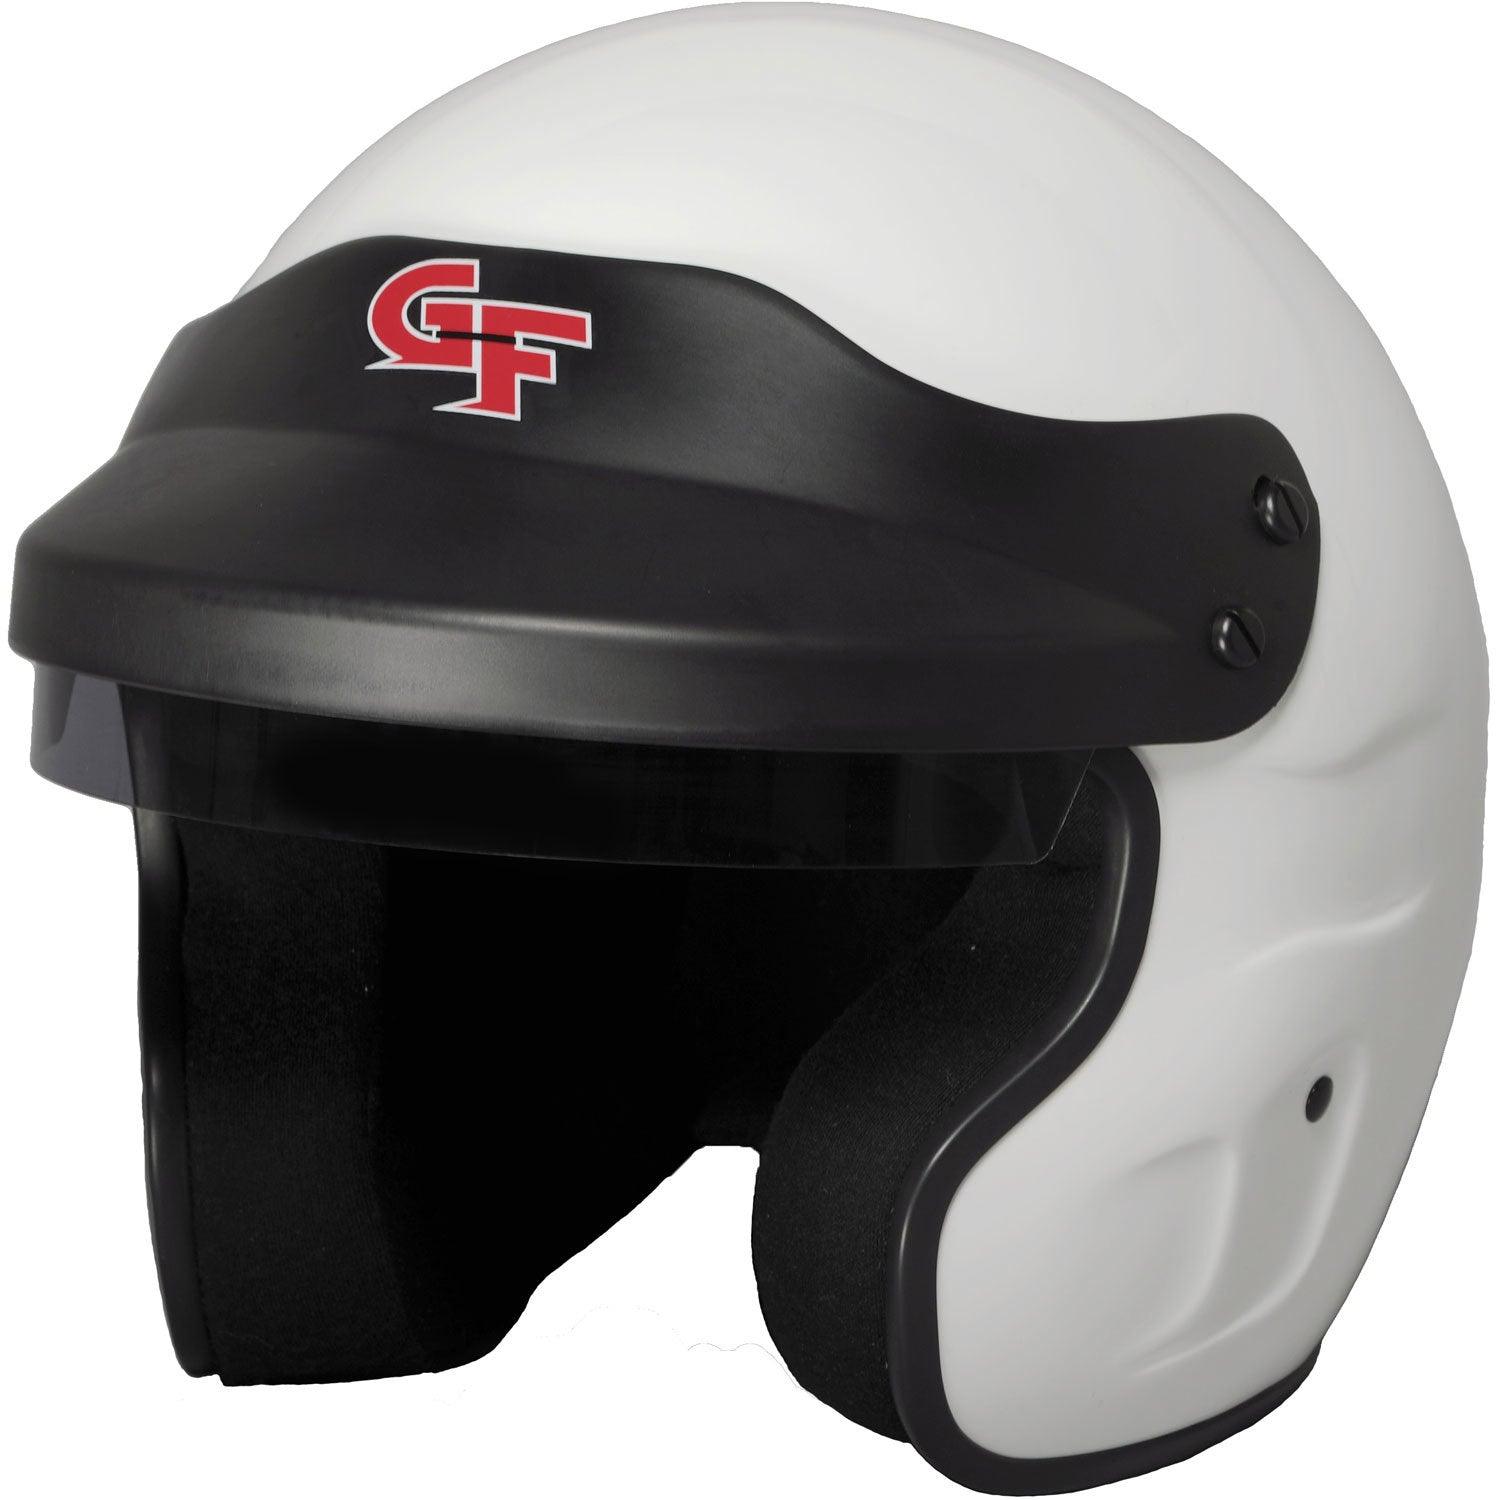 Helmet GF1 Open Large White SA2020 - Burlile Performance Products